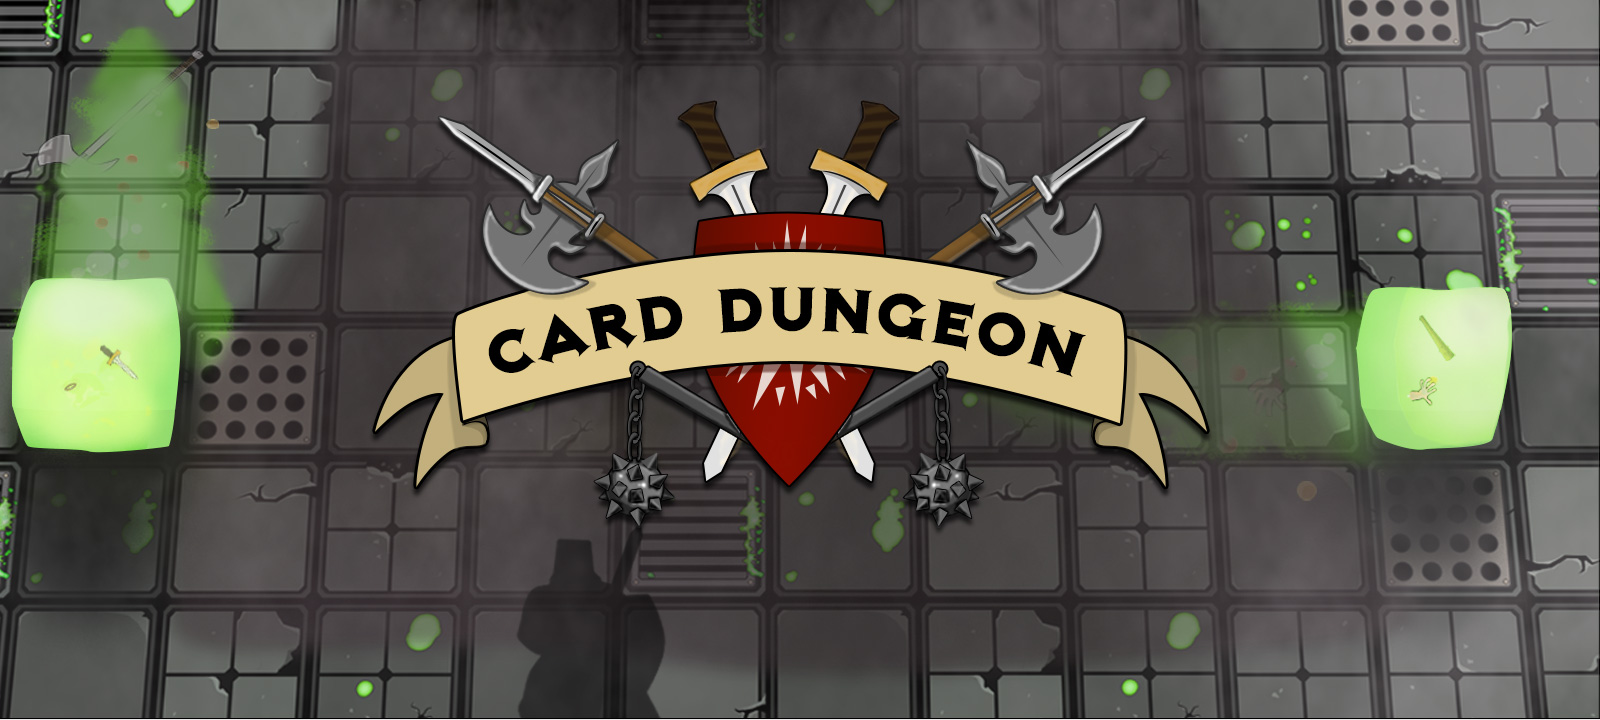 Card Dungeon #5